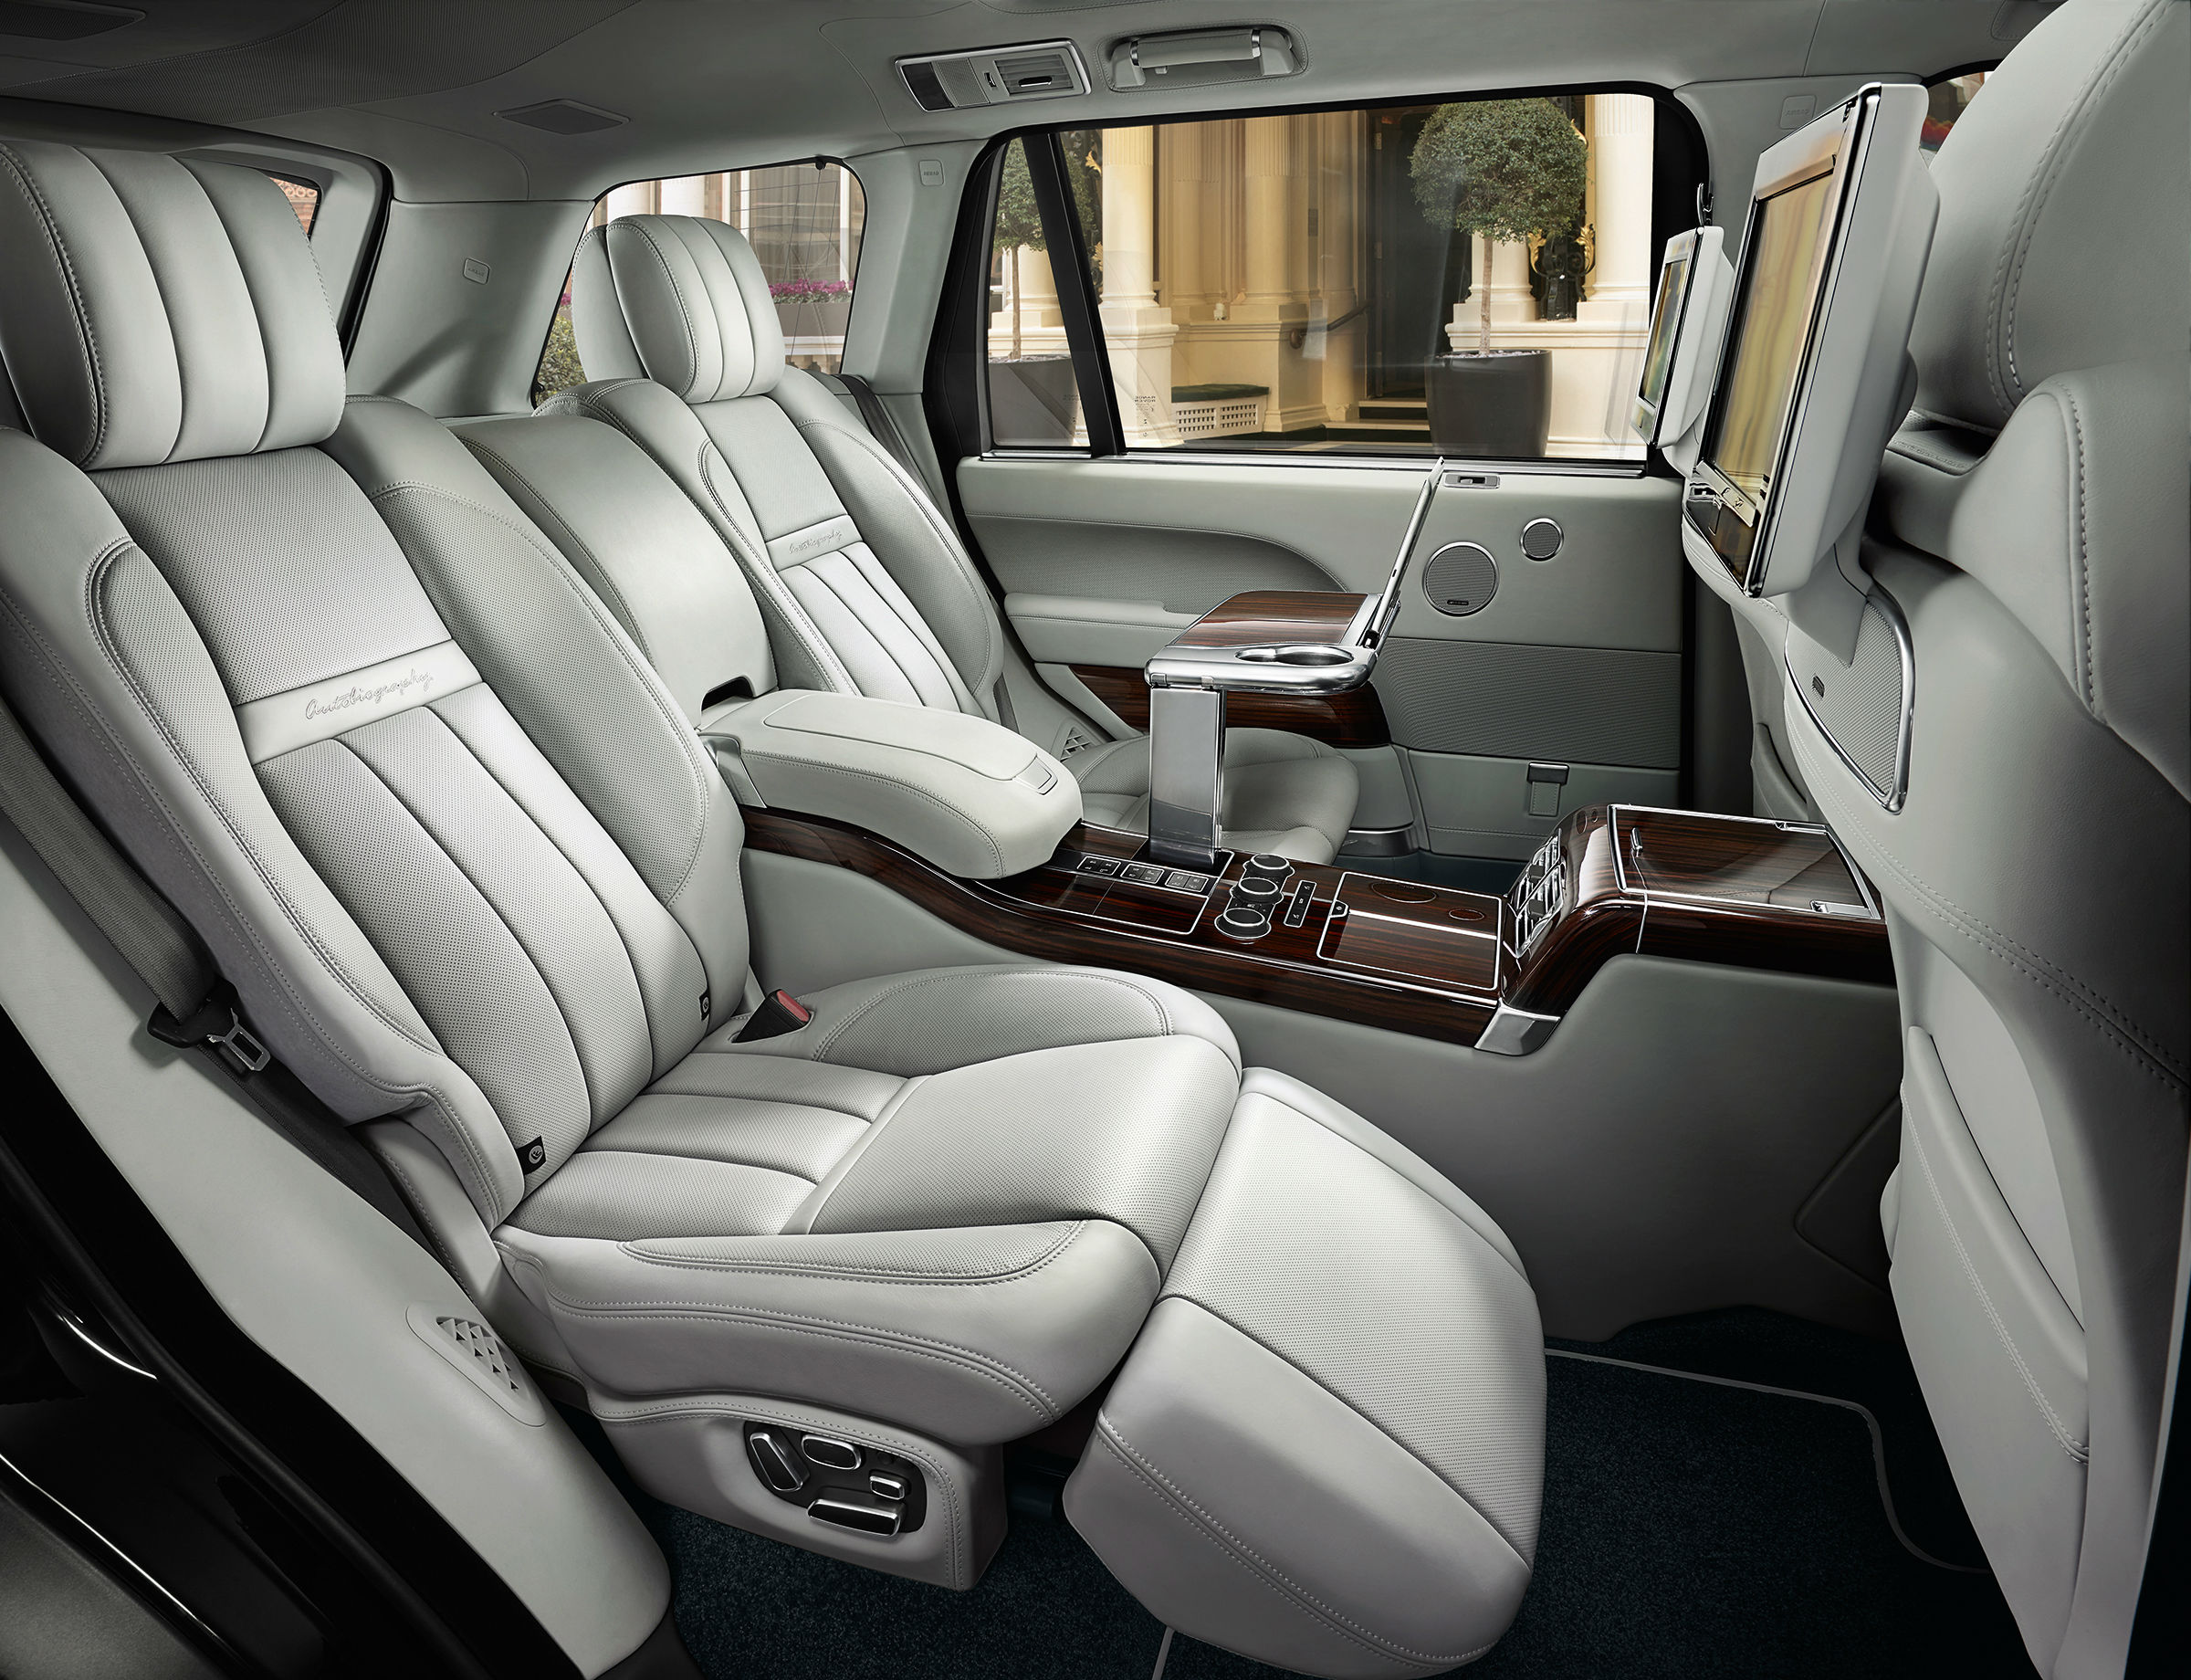 Range Rover SVAutobiography interior